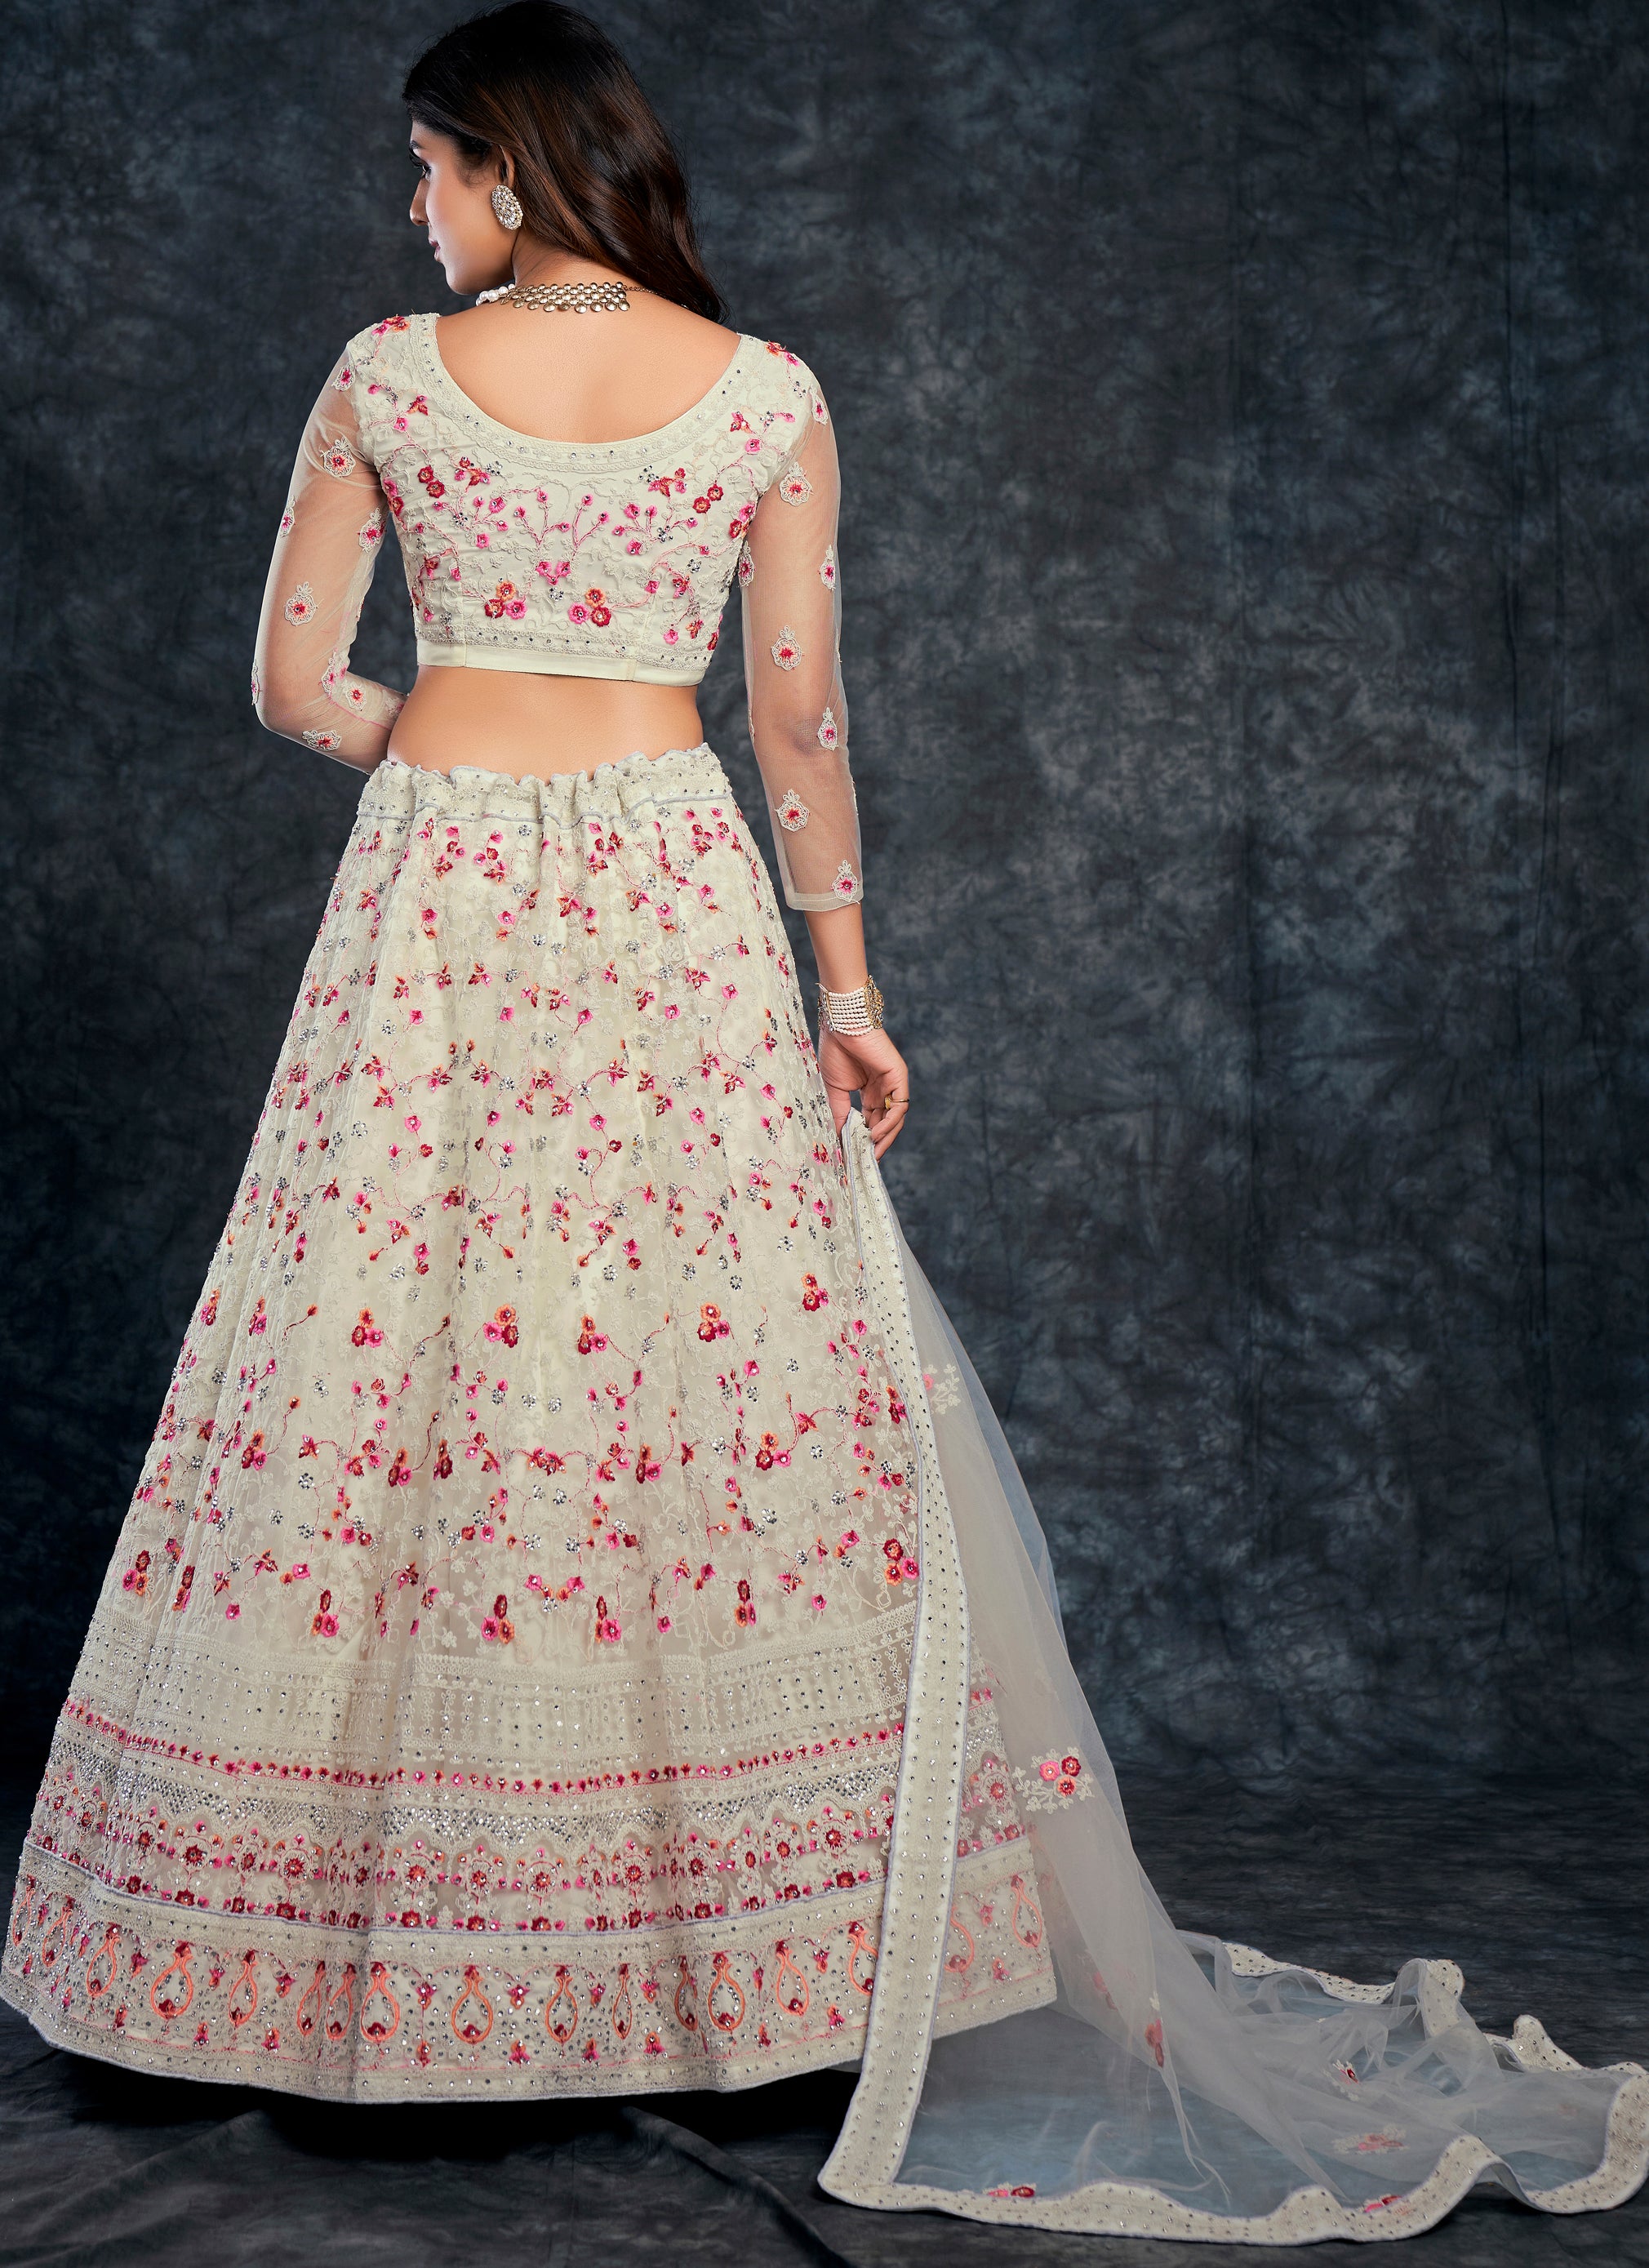 Heavenly Off-White and Pink Colored Designer Bridal Lehenga Choli